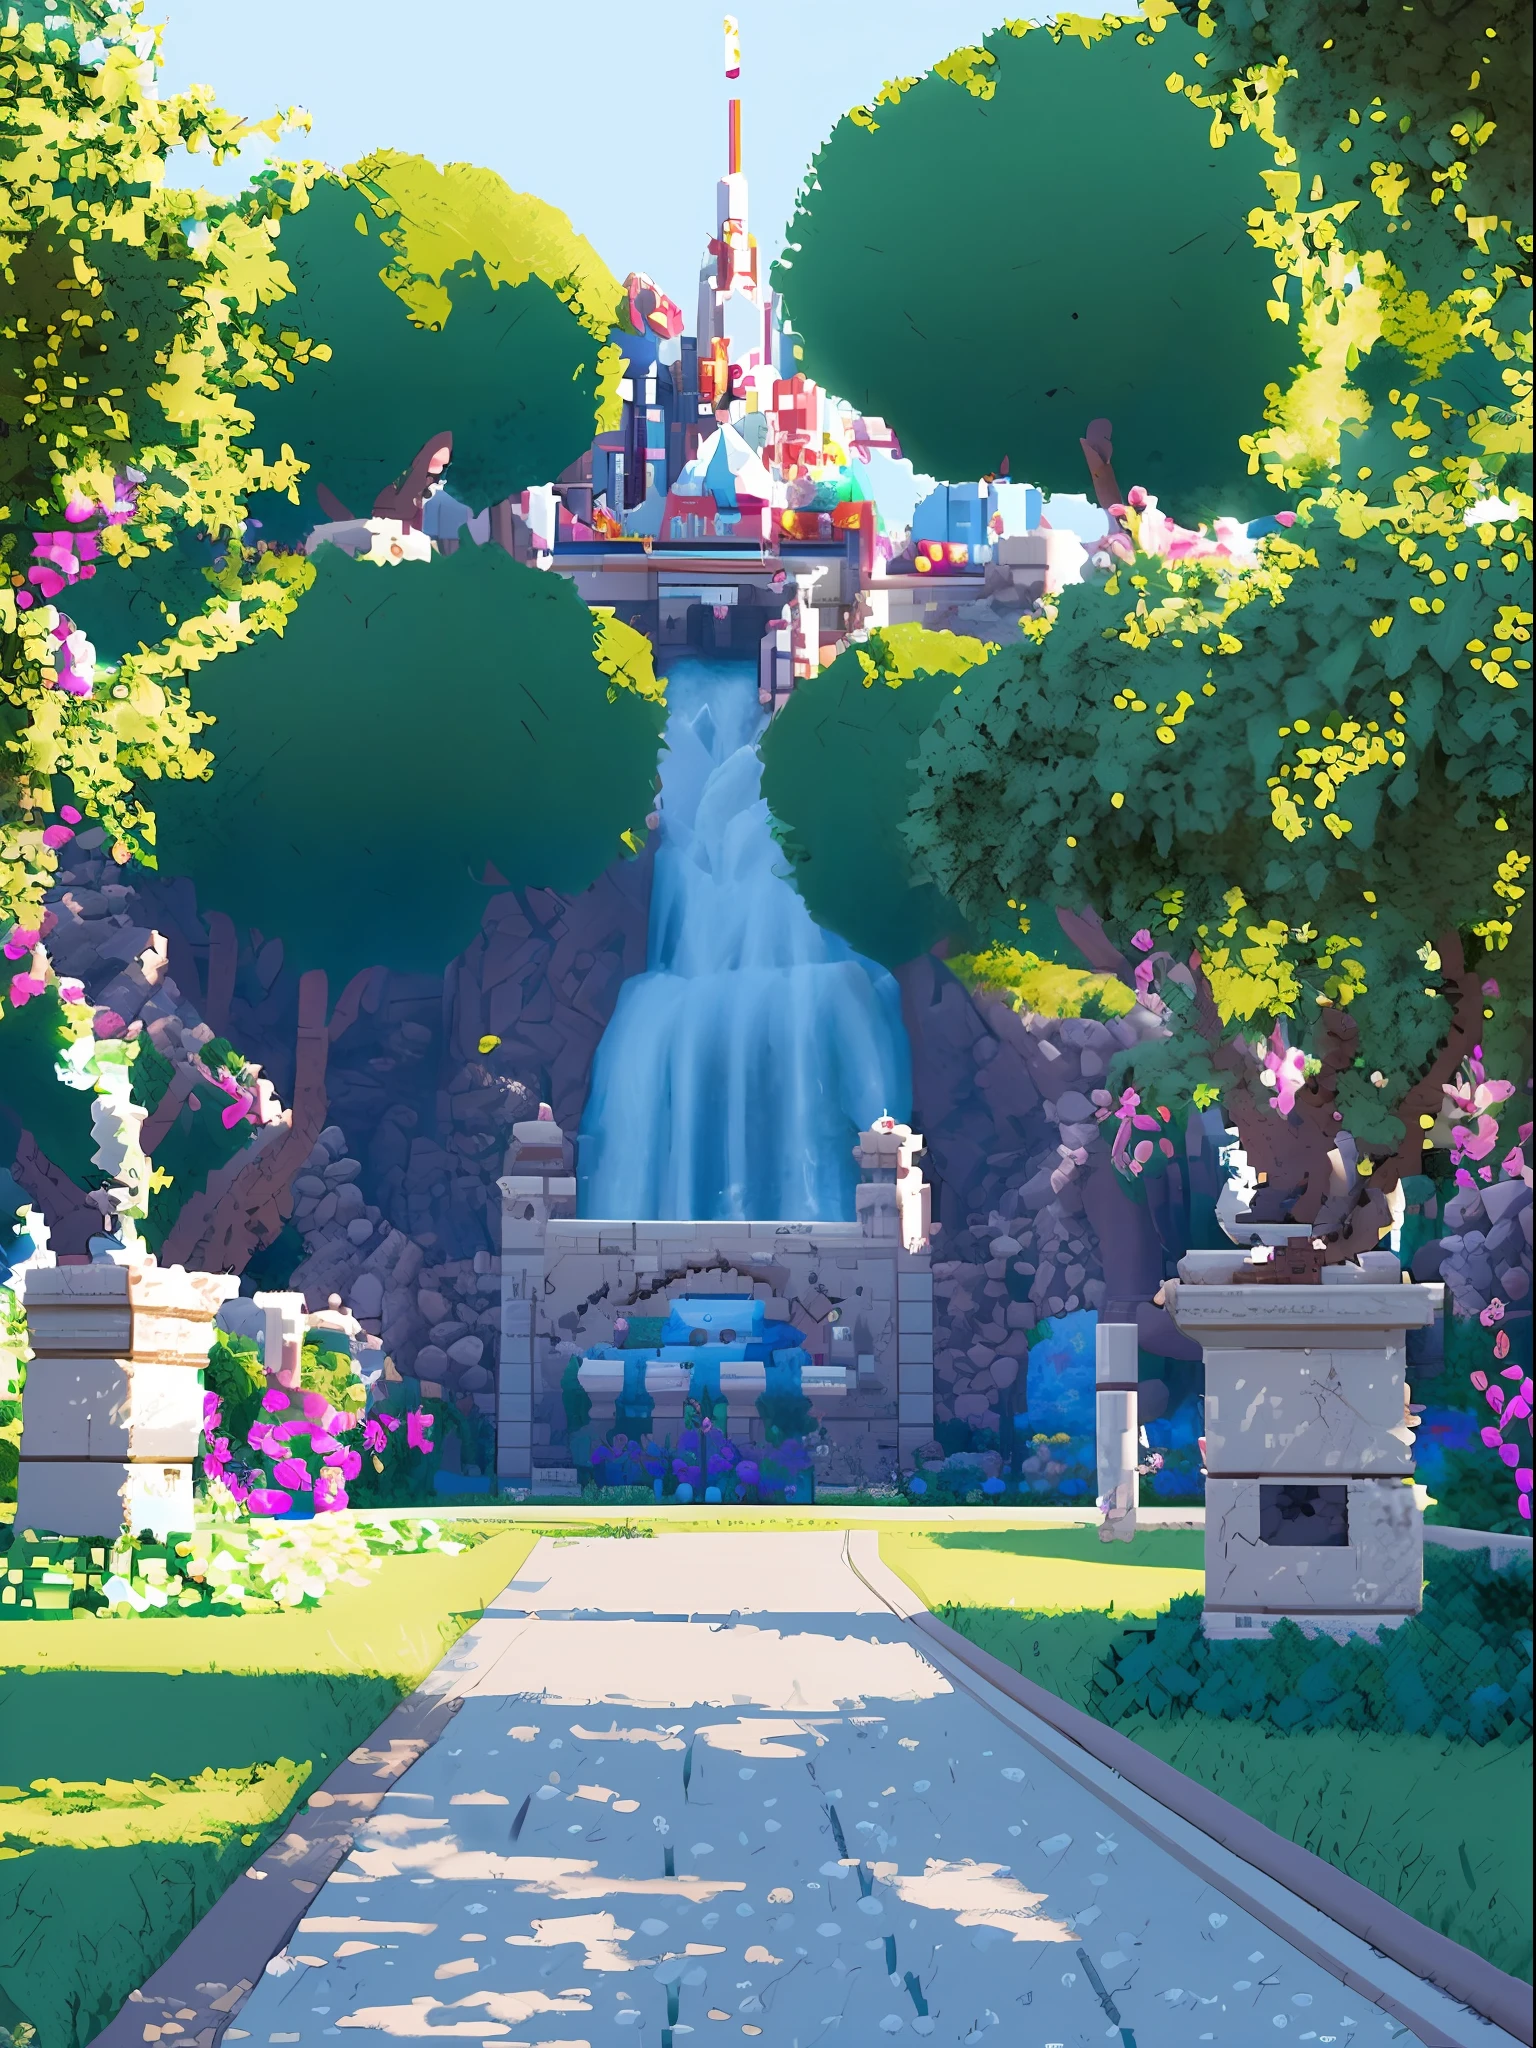 ((impresionante arte de píxeles:1.2), (paisaje de parque ultrarrealista:1.1)), Princesa Peach saludando